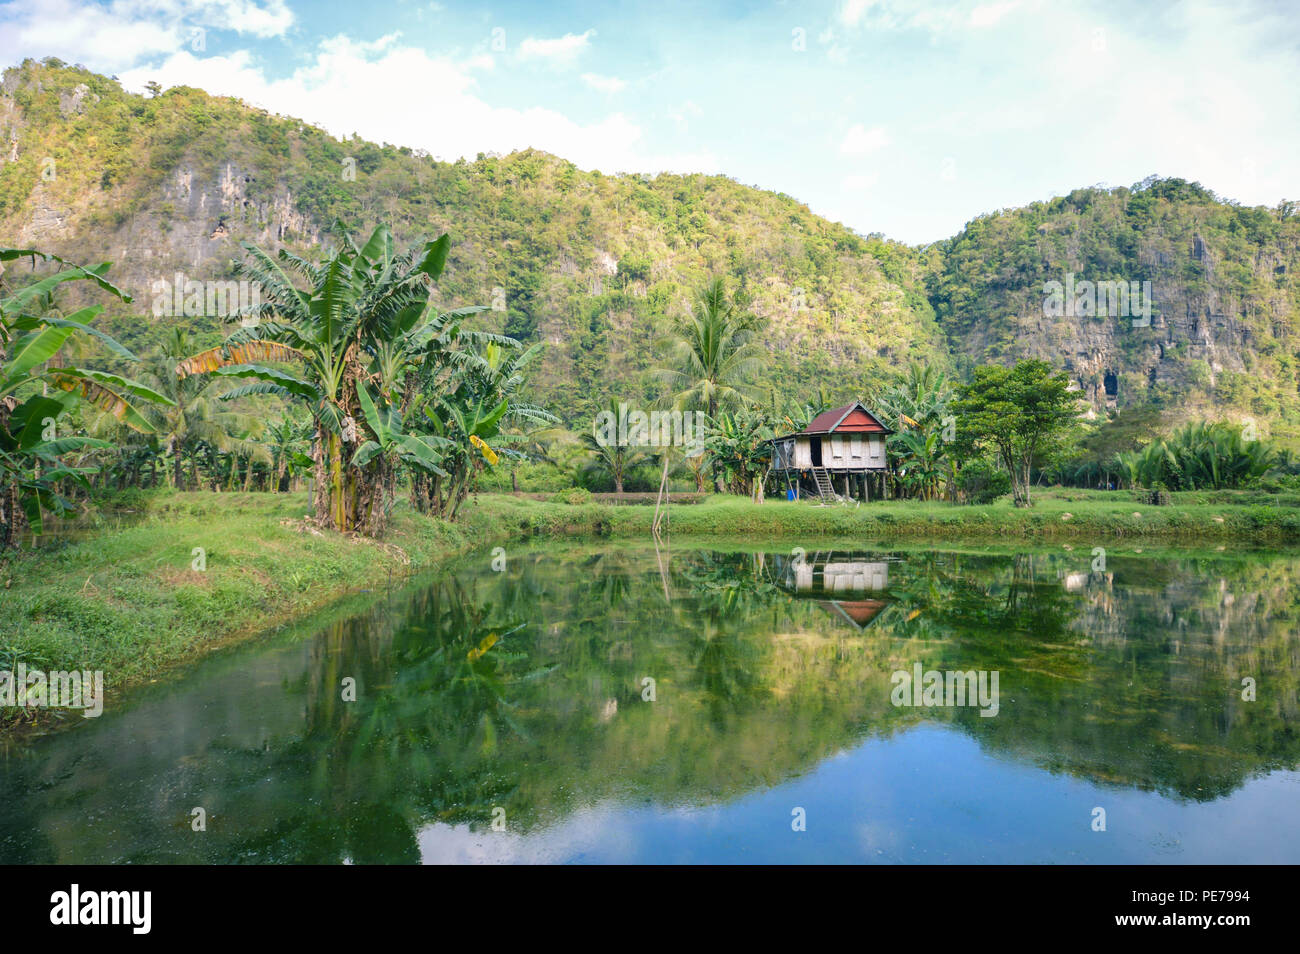 Beautiful limestones and water reflections in Rammang Rammang park near Makassar, South Sulawesi, Indonesia Stock Photo